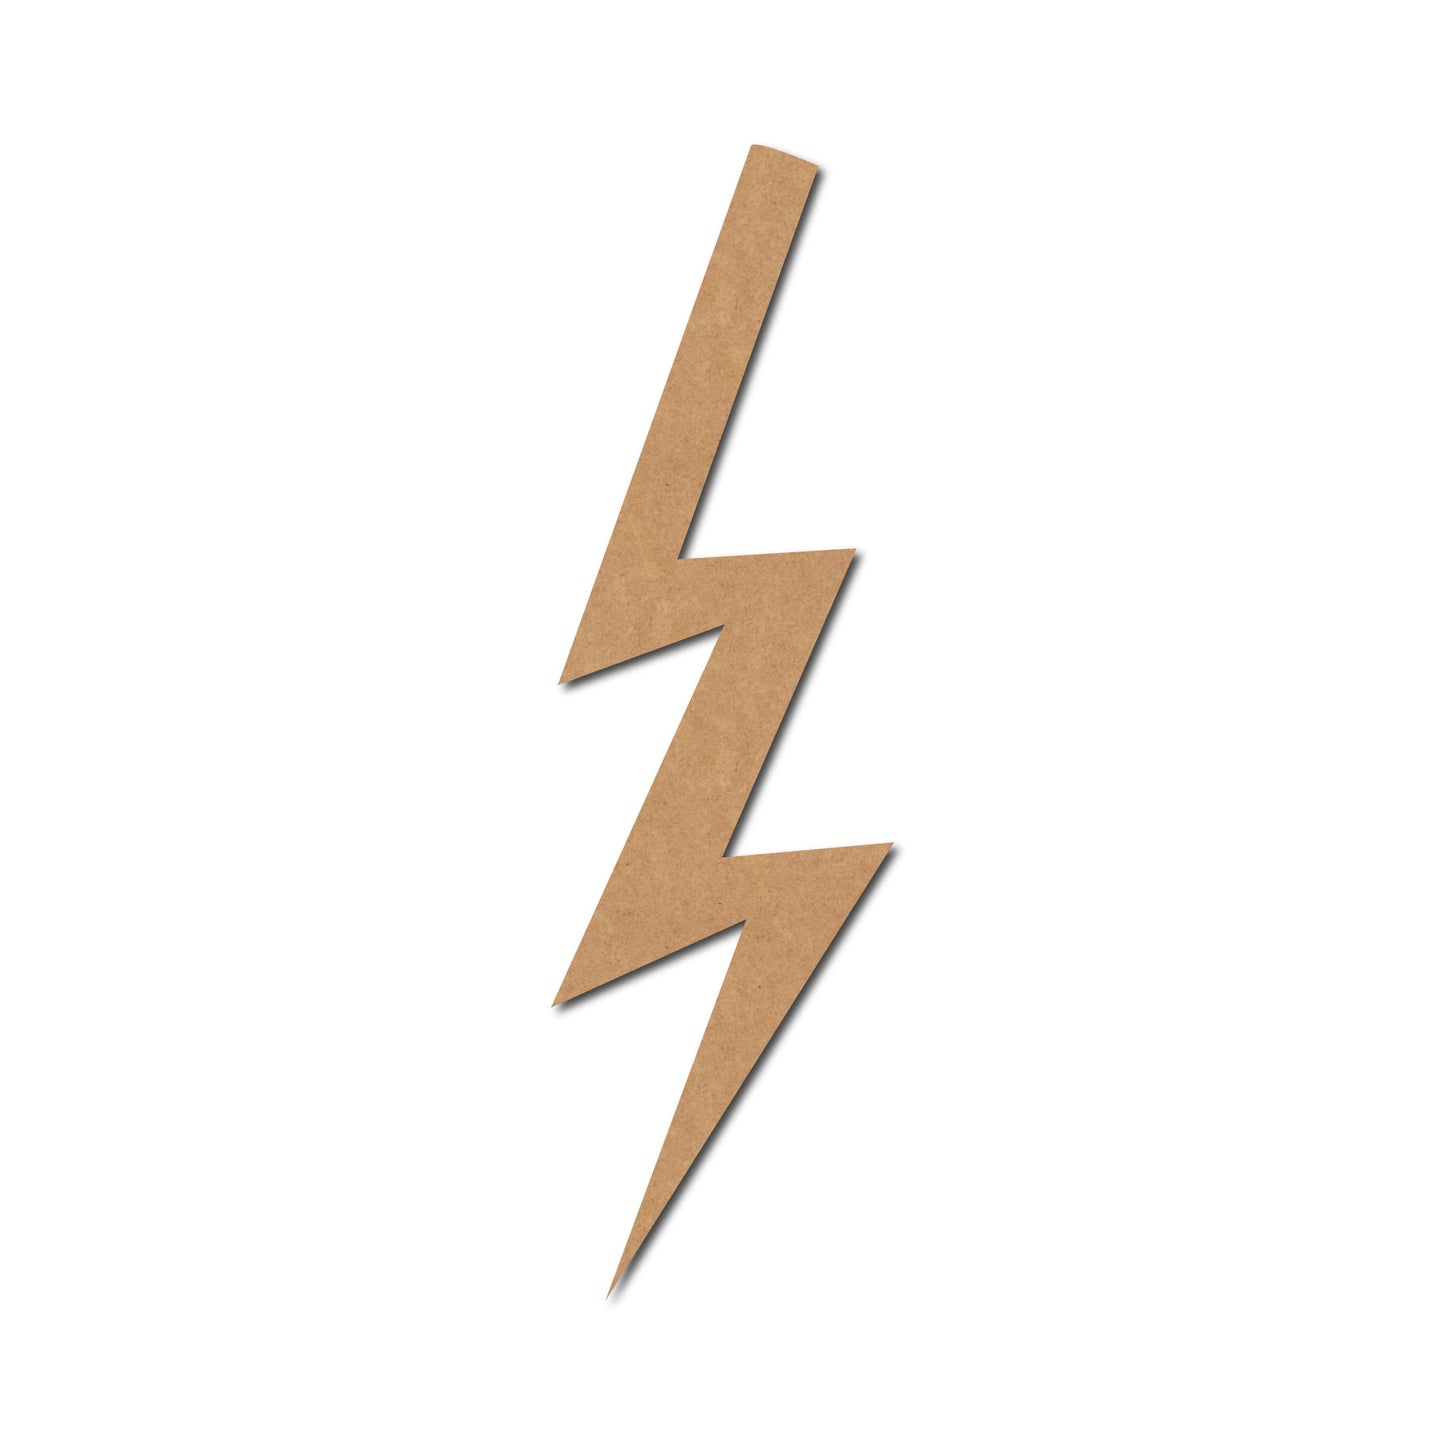 Harry Potter Lightning Bolt Cutout MDF Design 1